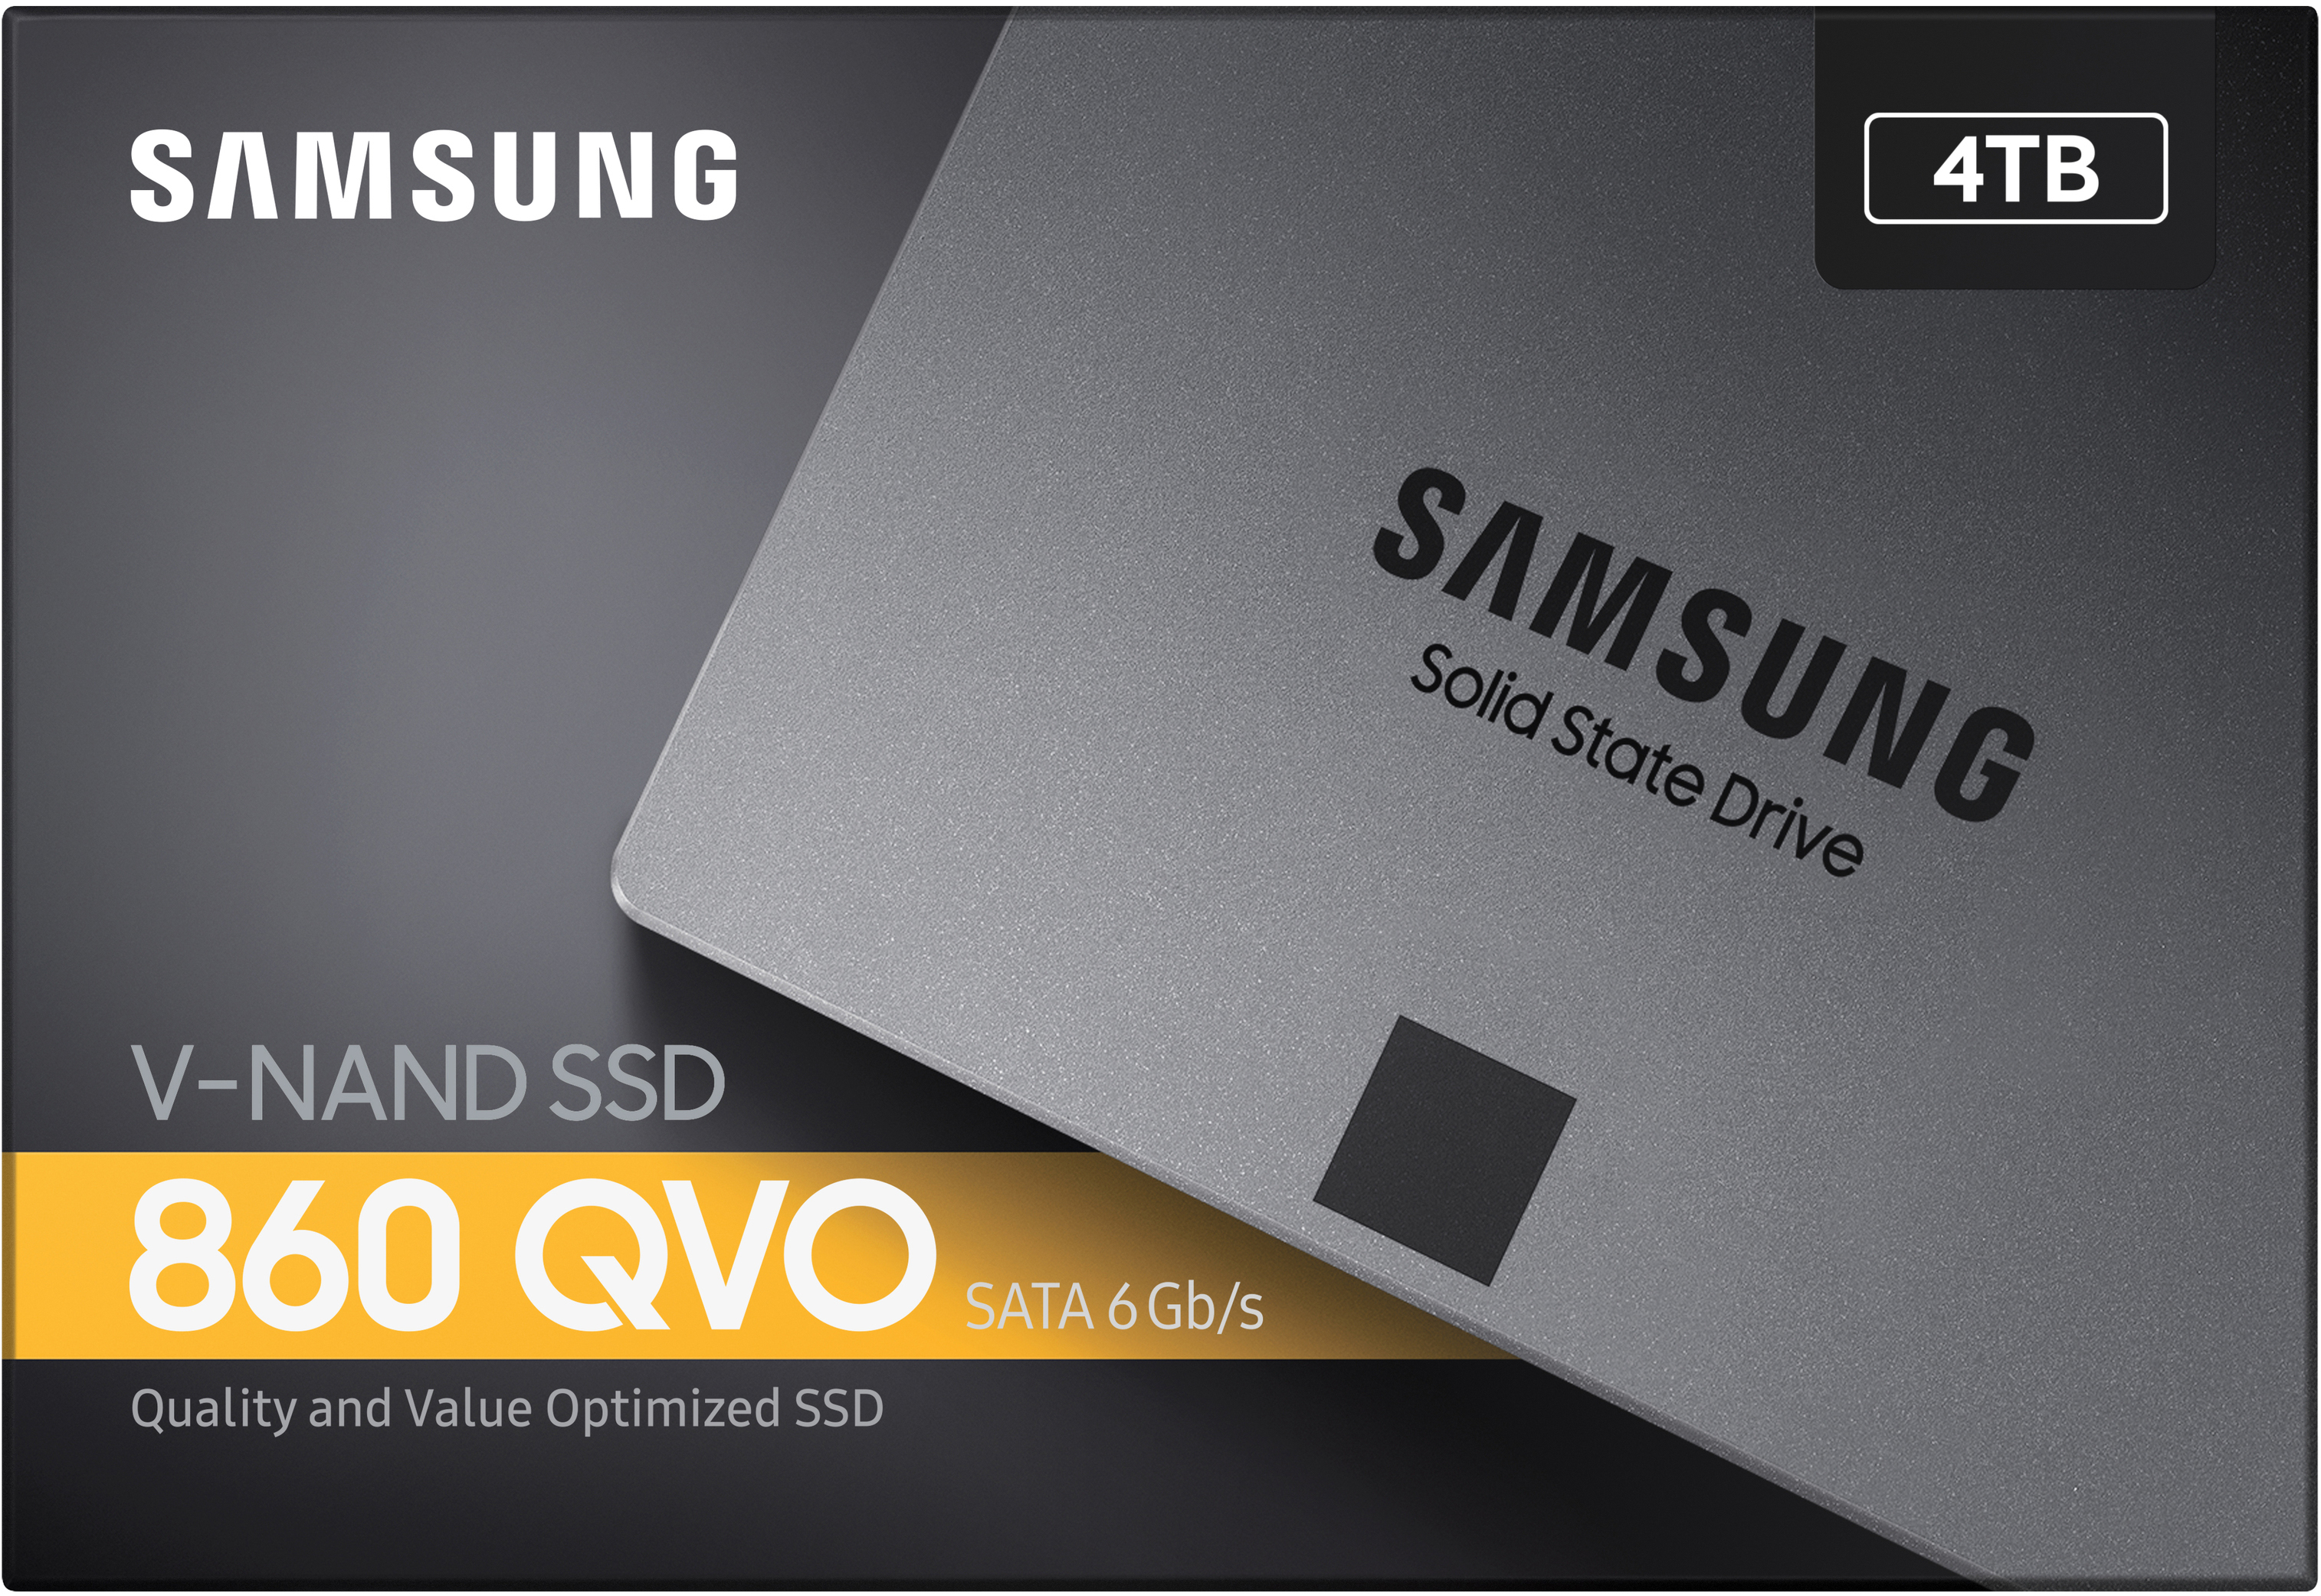 Gbps, 860 TB 2,5 QVO 6 SAMSUNG 4 SATA SSD Zoll, Festplatte, intern